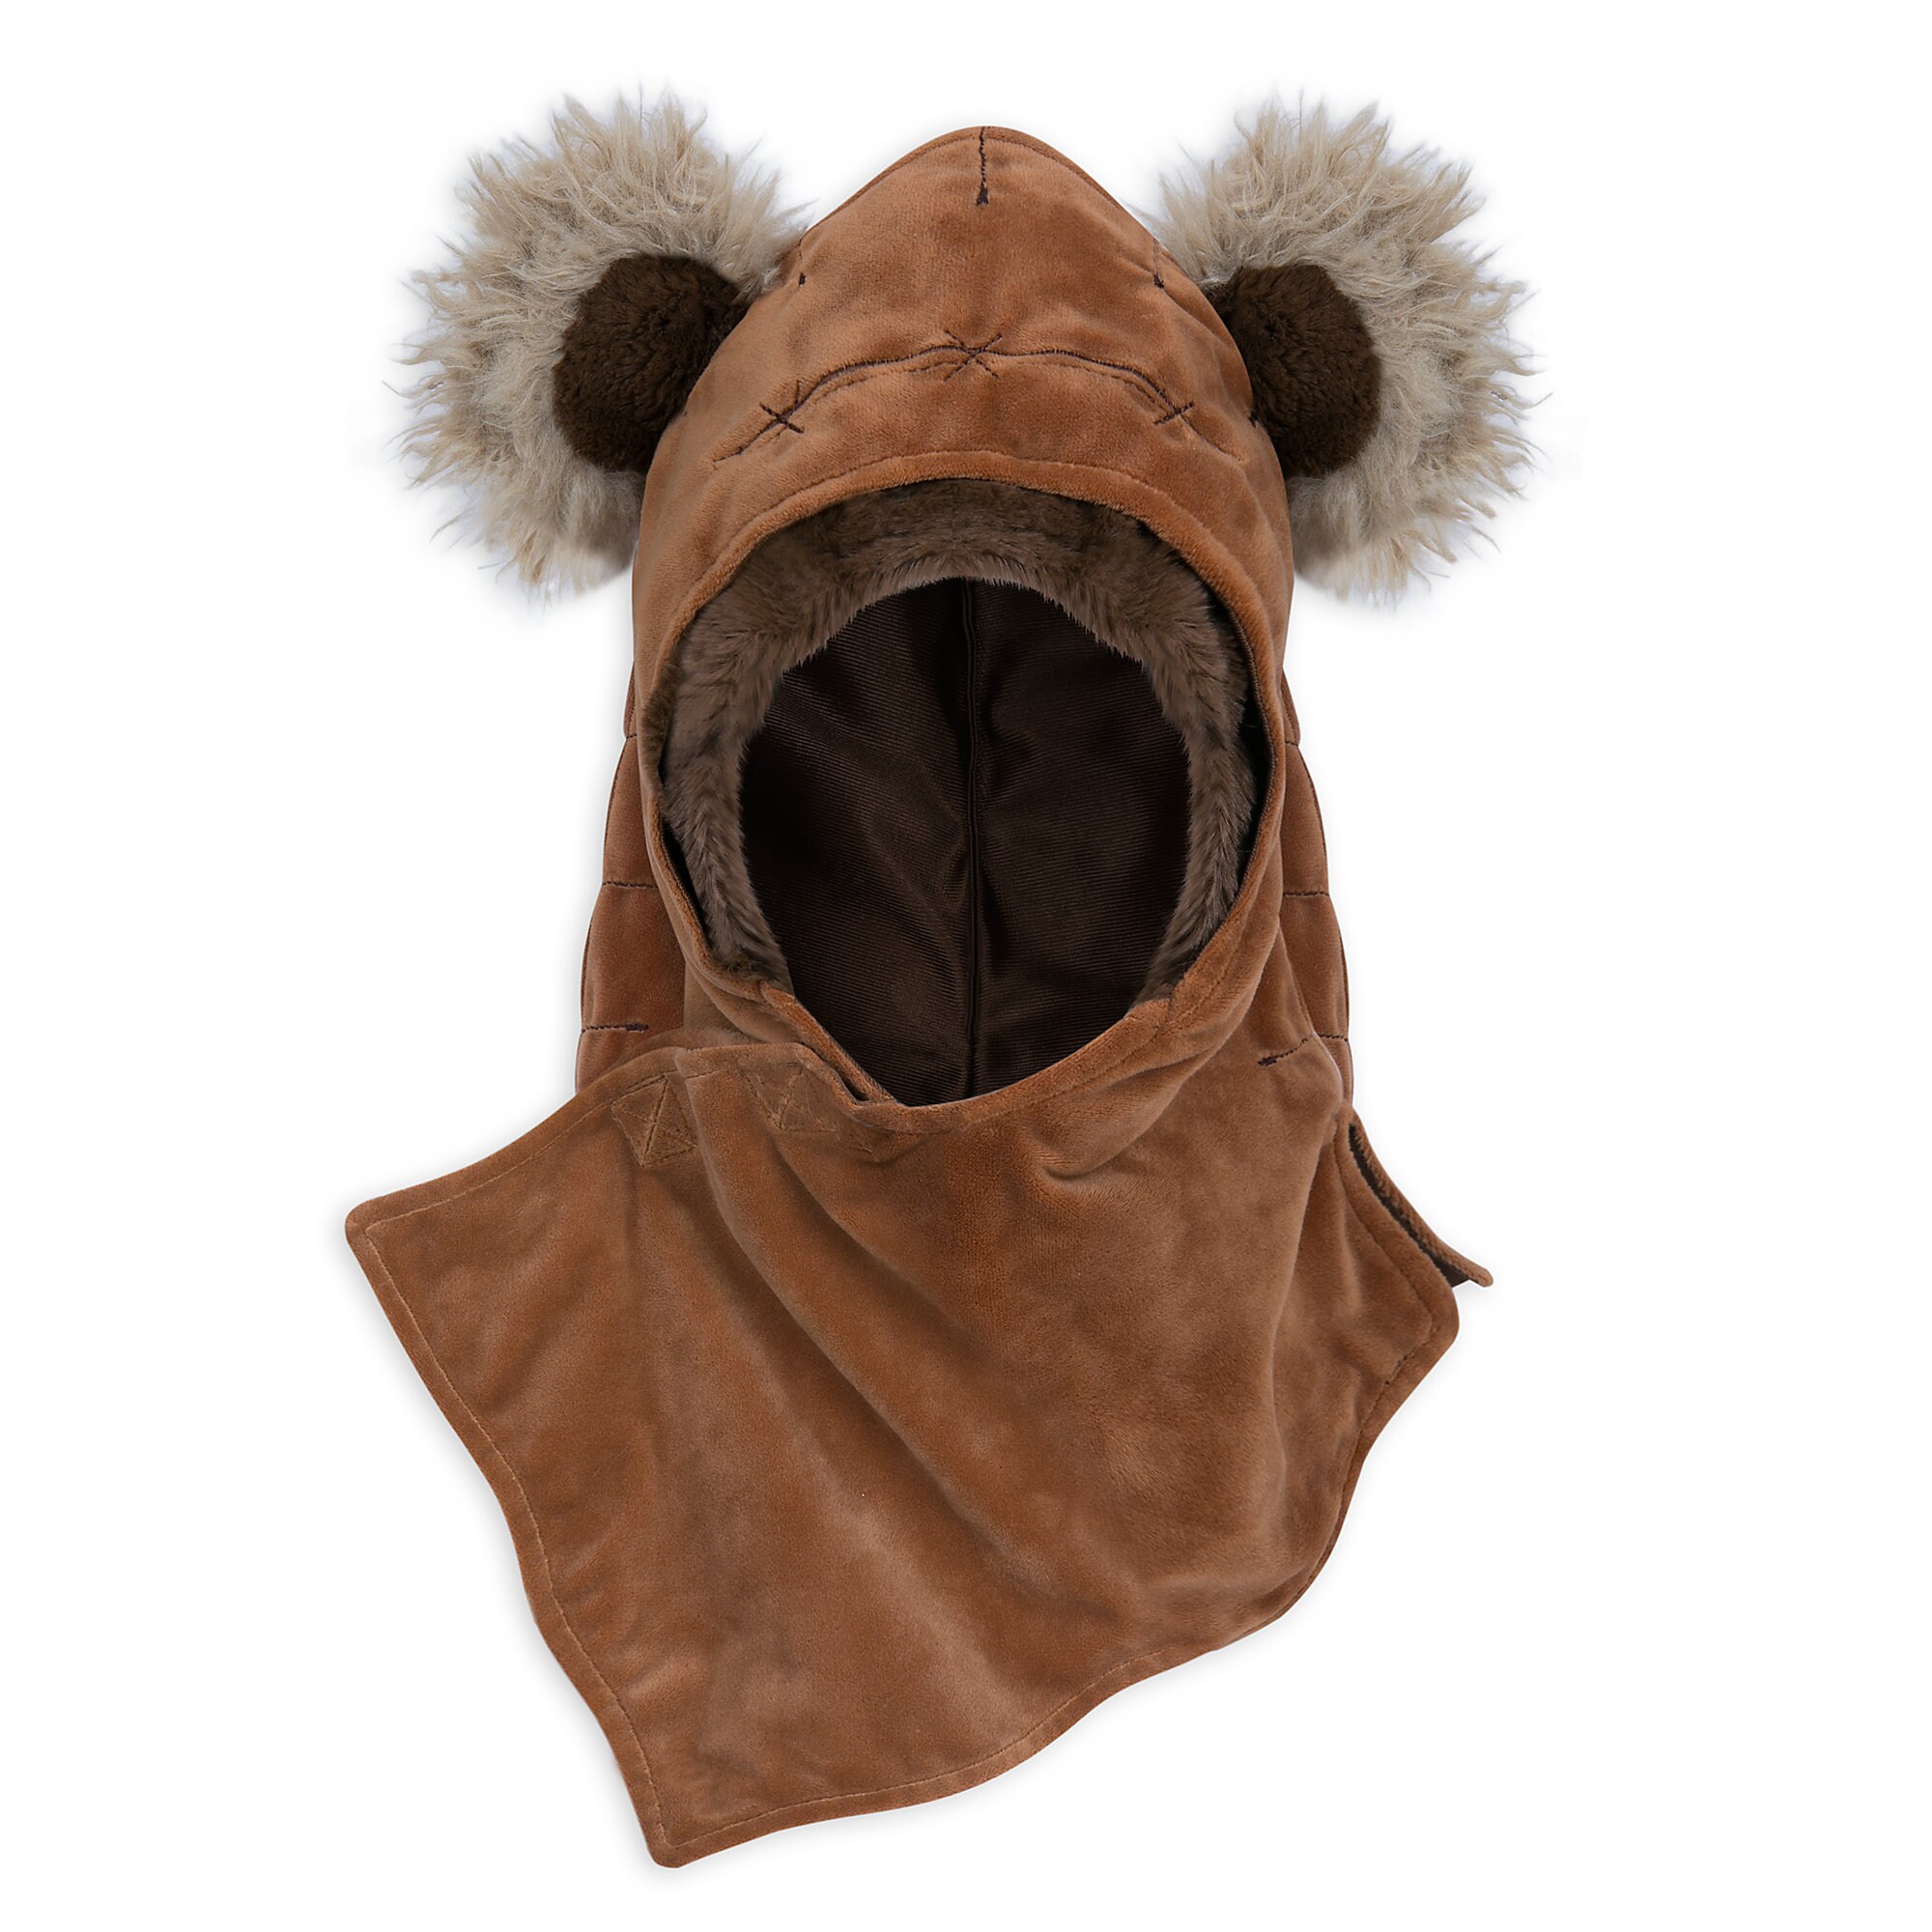 Ewok Costume for Baby - Star Wars